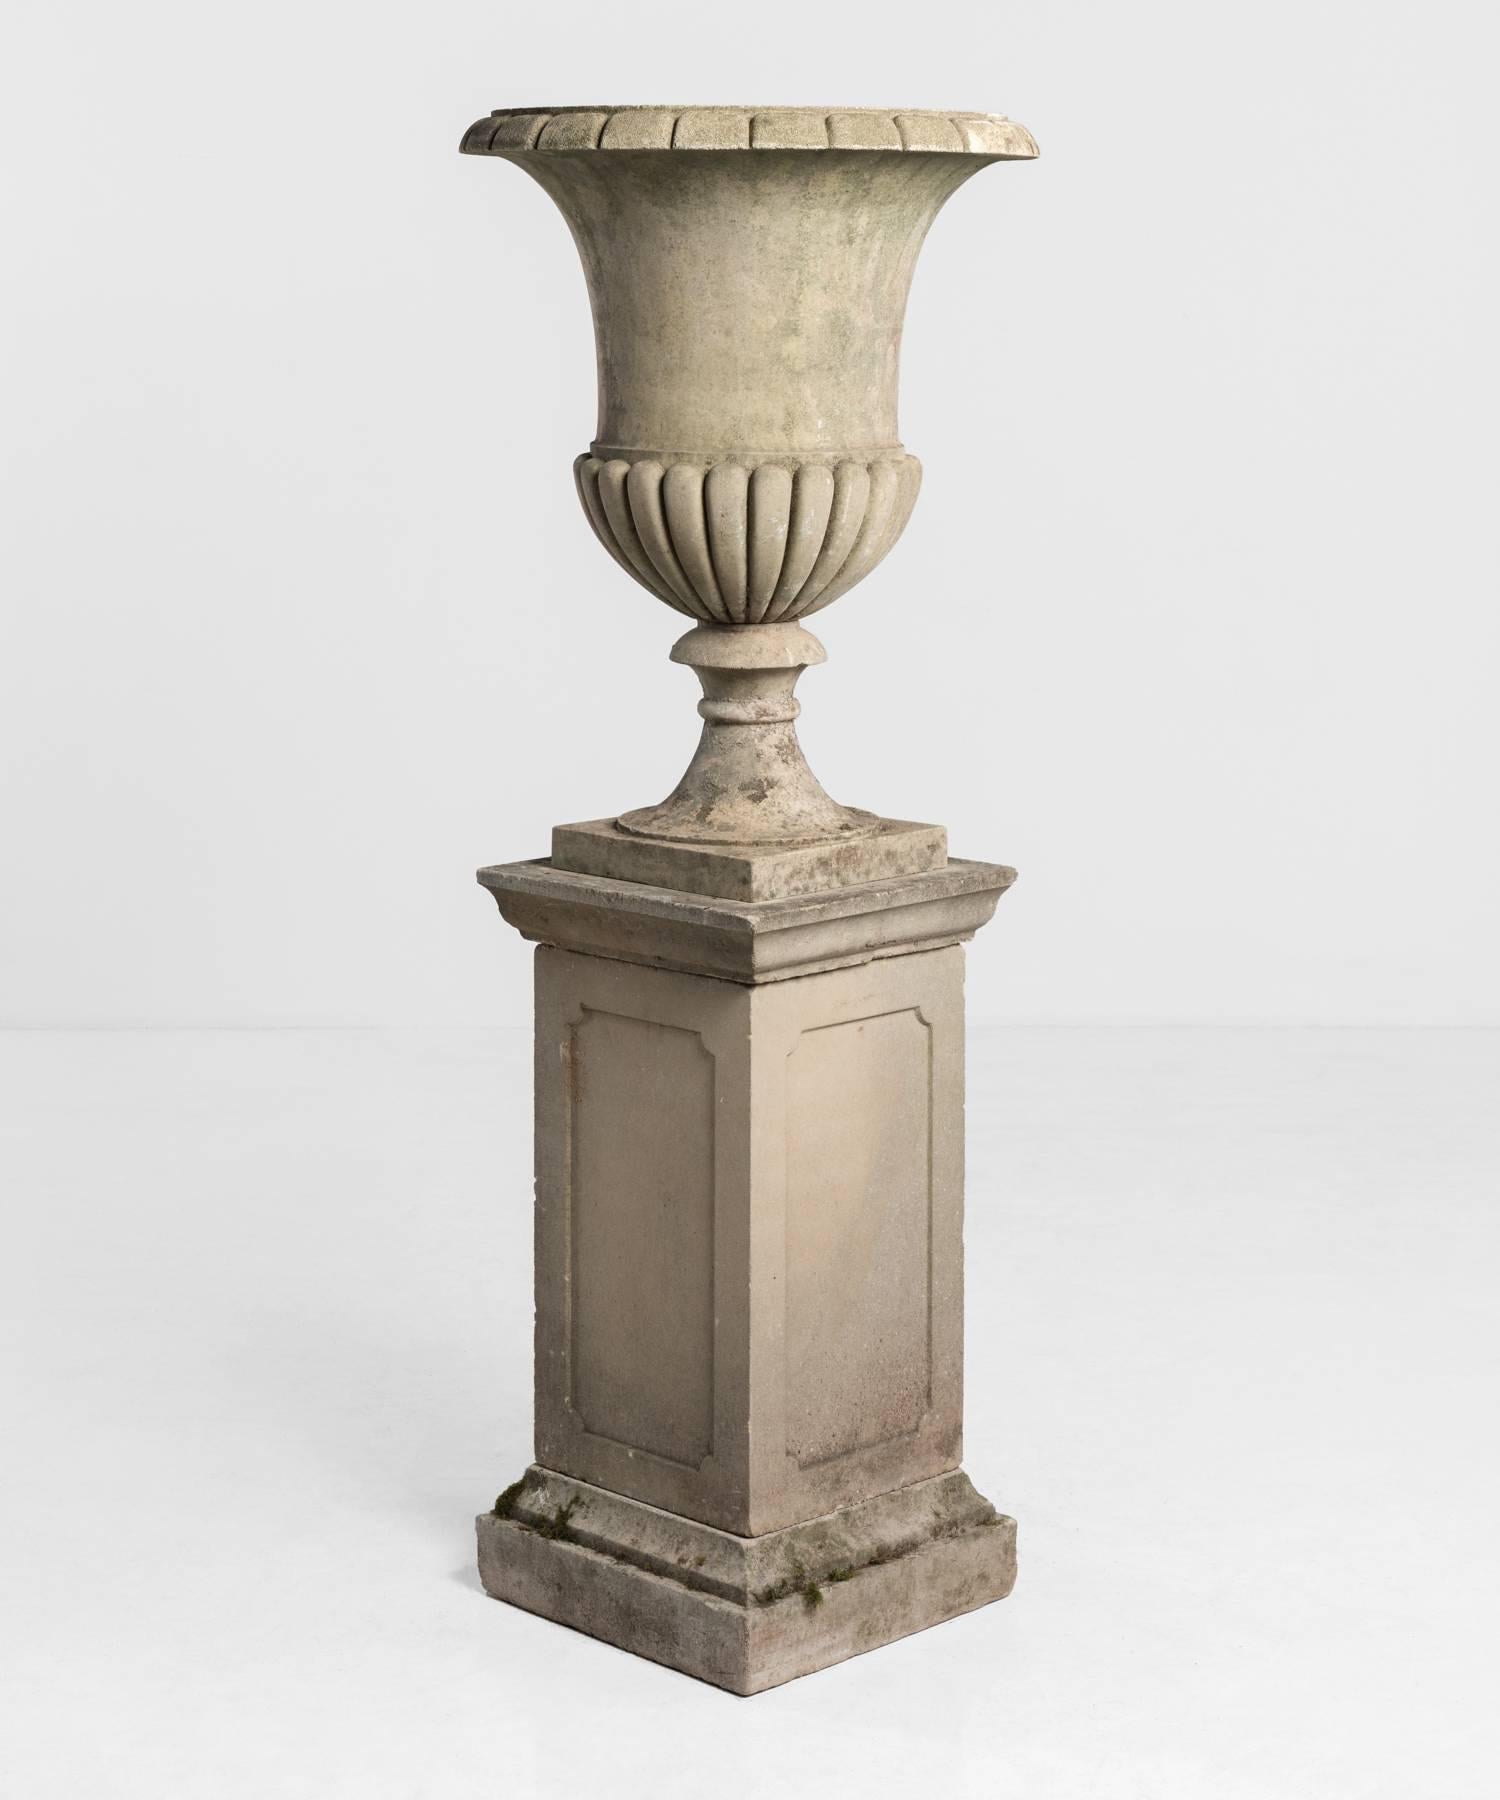 Large sandstone urn with pedestal, circa 1950.

Elegant form with original patina.